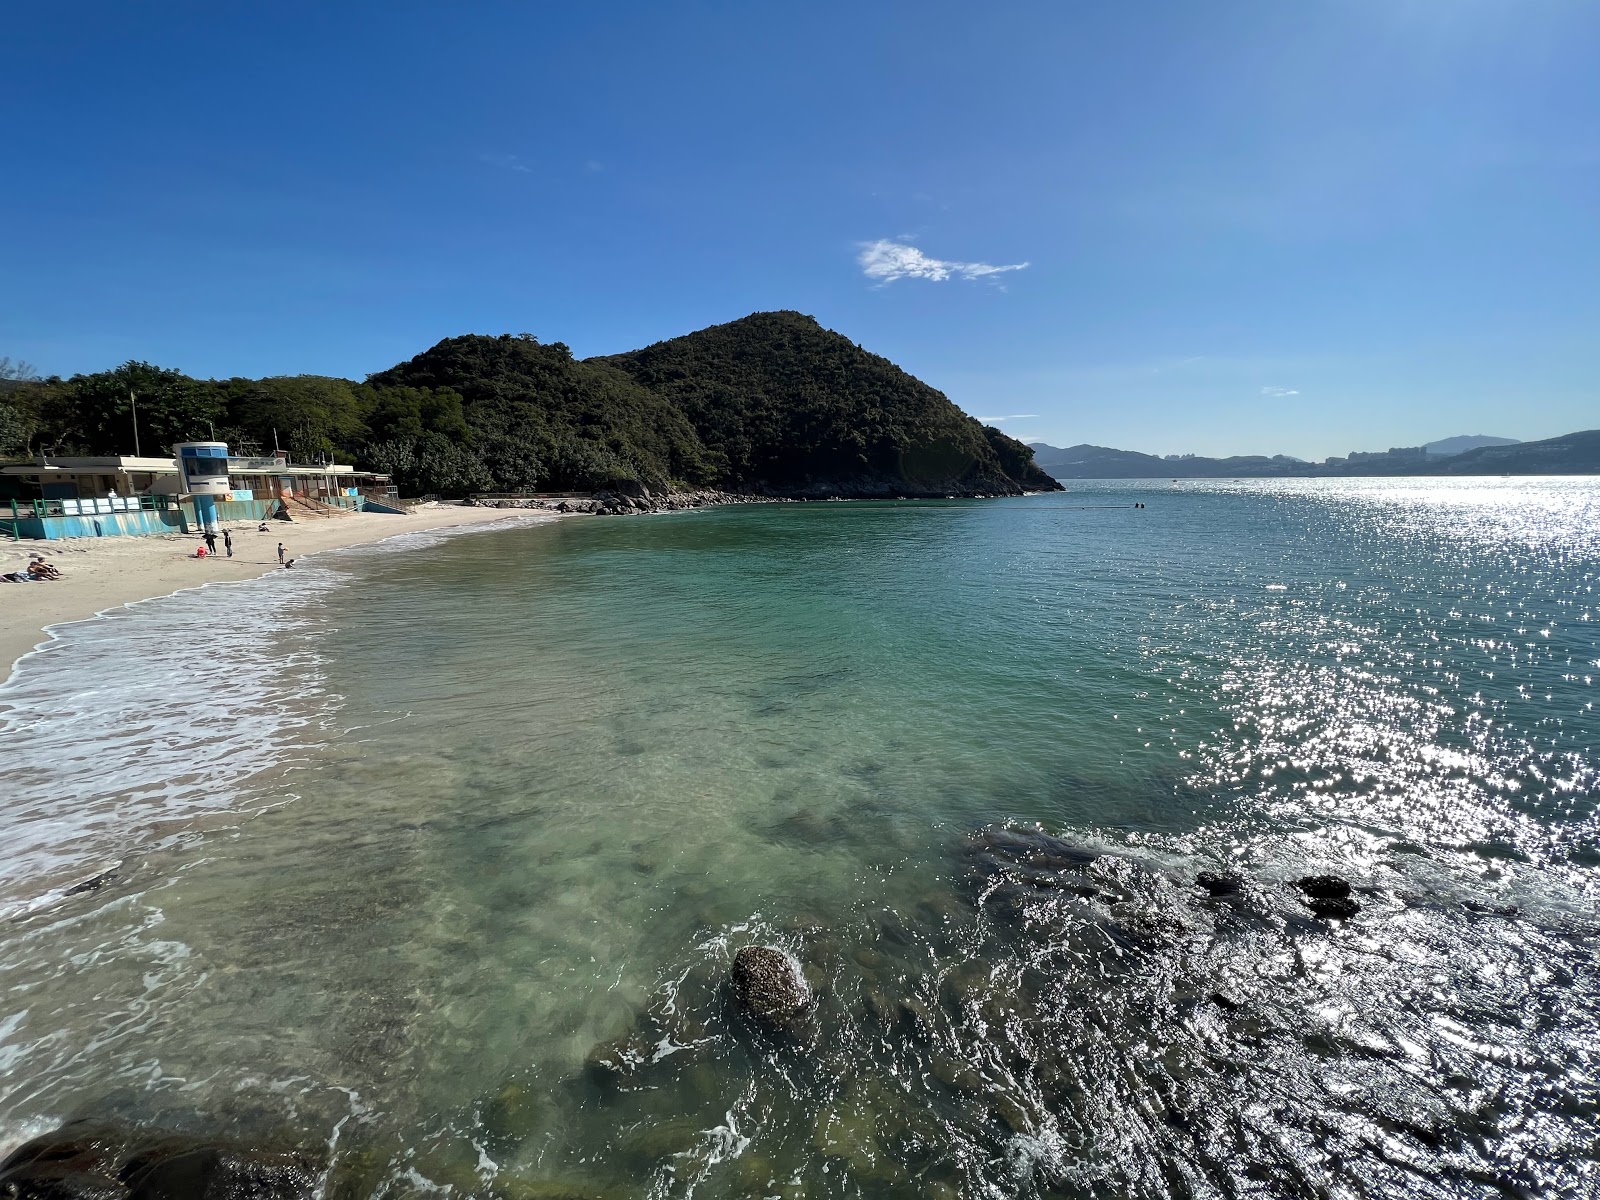 Fotografija Kiu Tsui Beach nahaja se v naravnem okolju